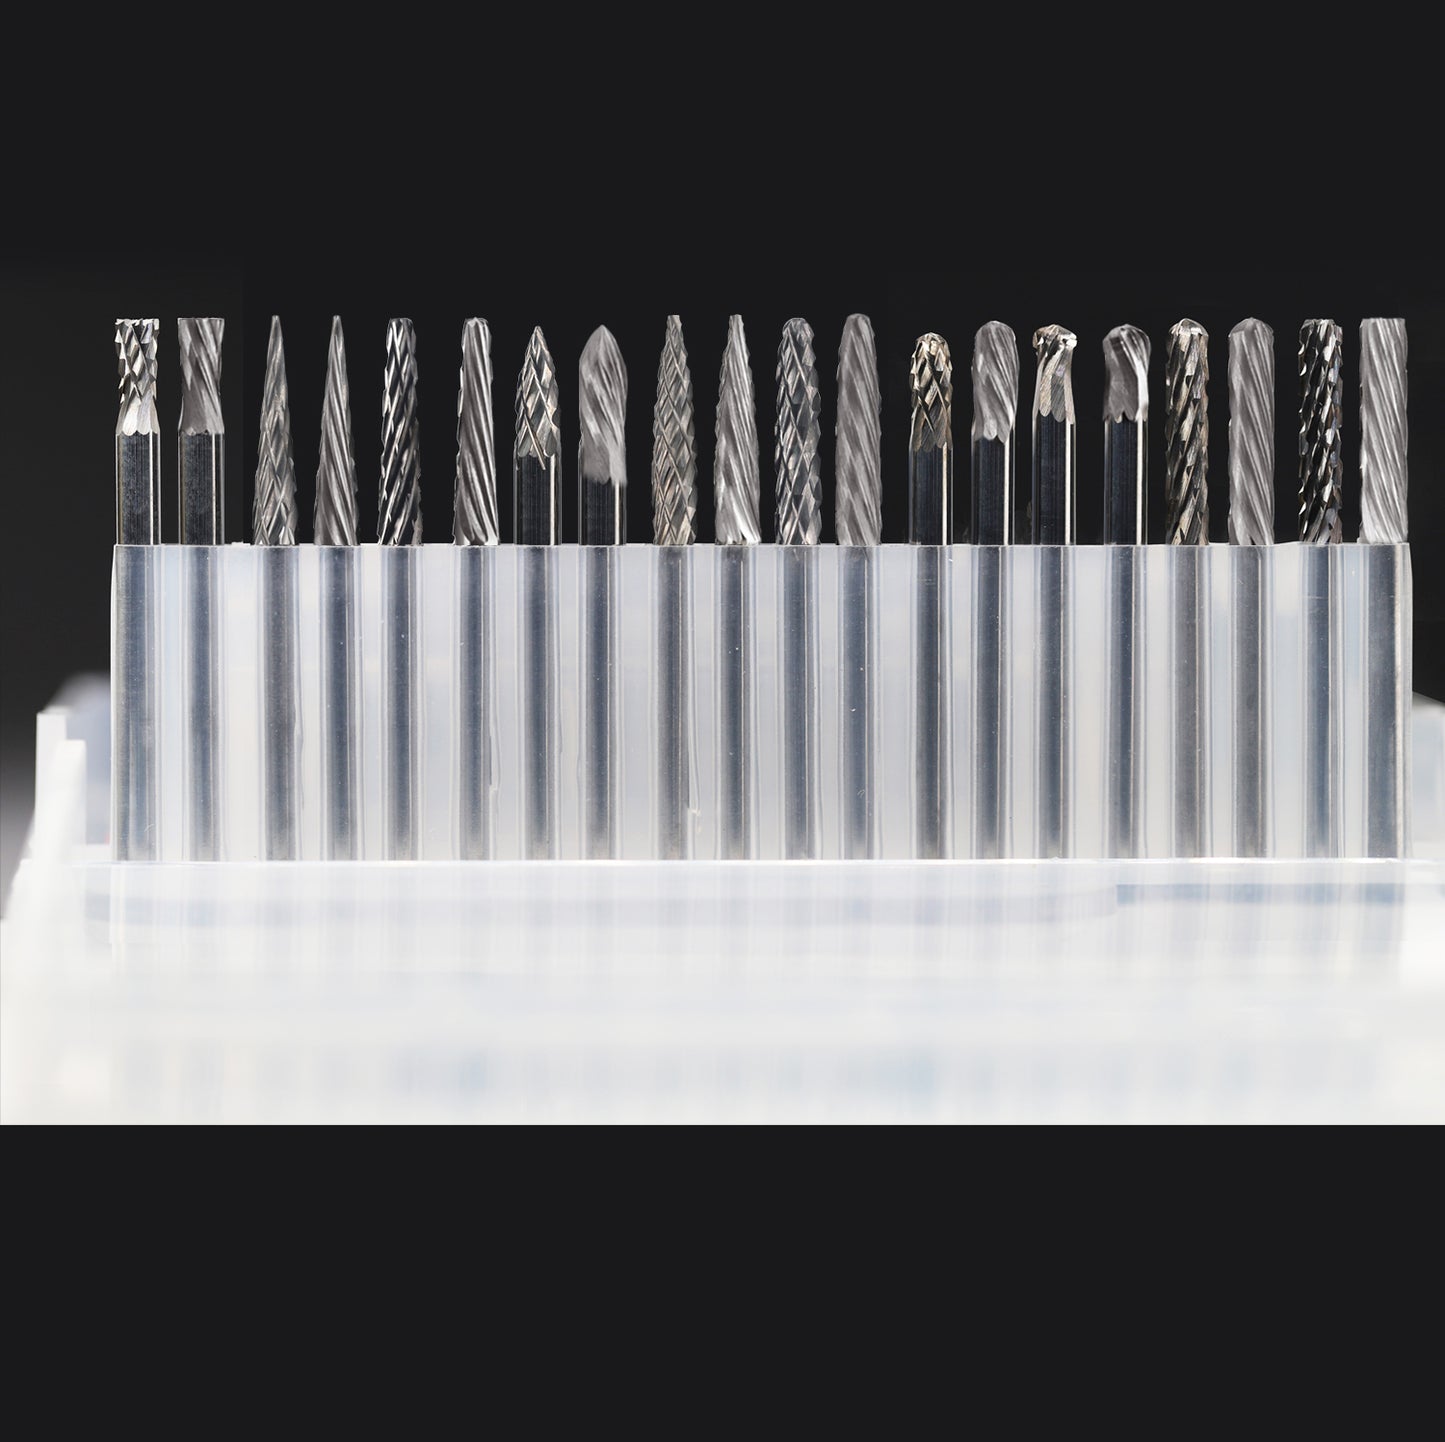 Tungsten Carbide Burrs Set Micro Precision Double Single Cut Mingle Carving Tools Kit 3mm 1/8" Inch Shank 20Pcs